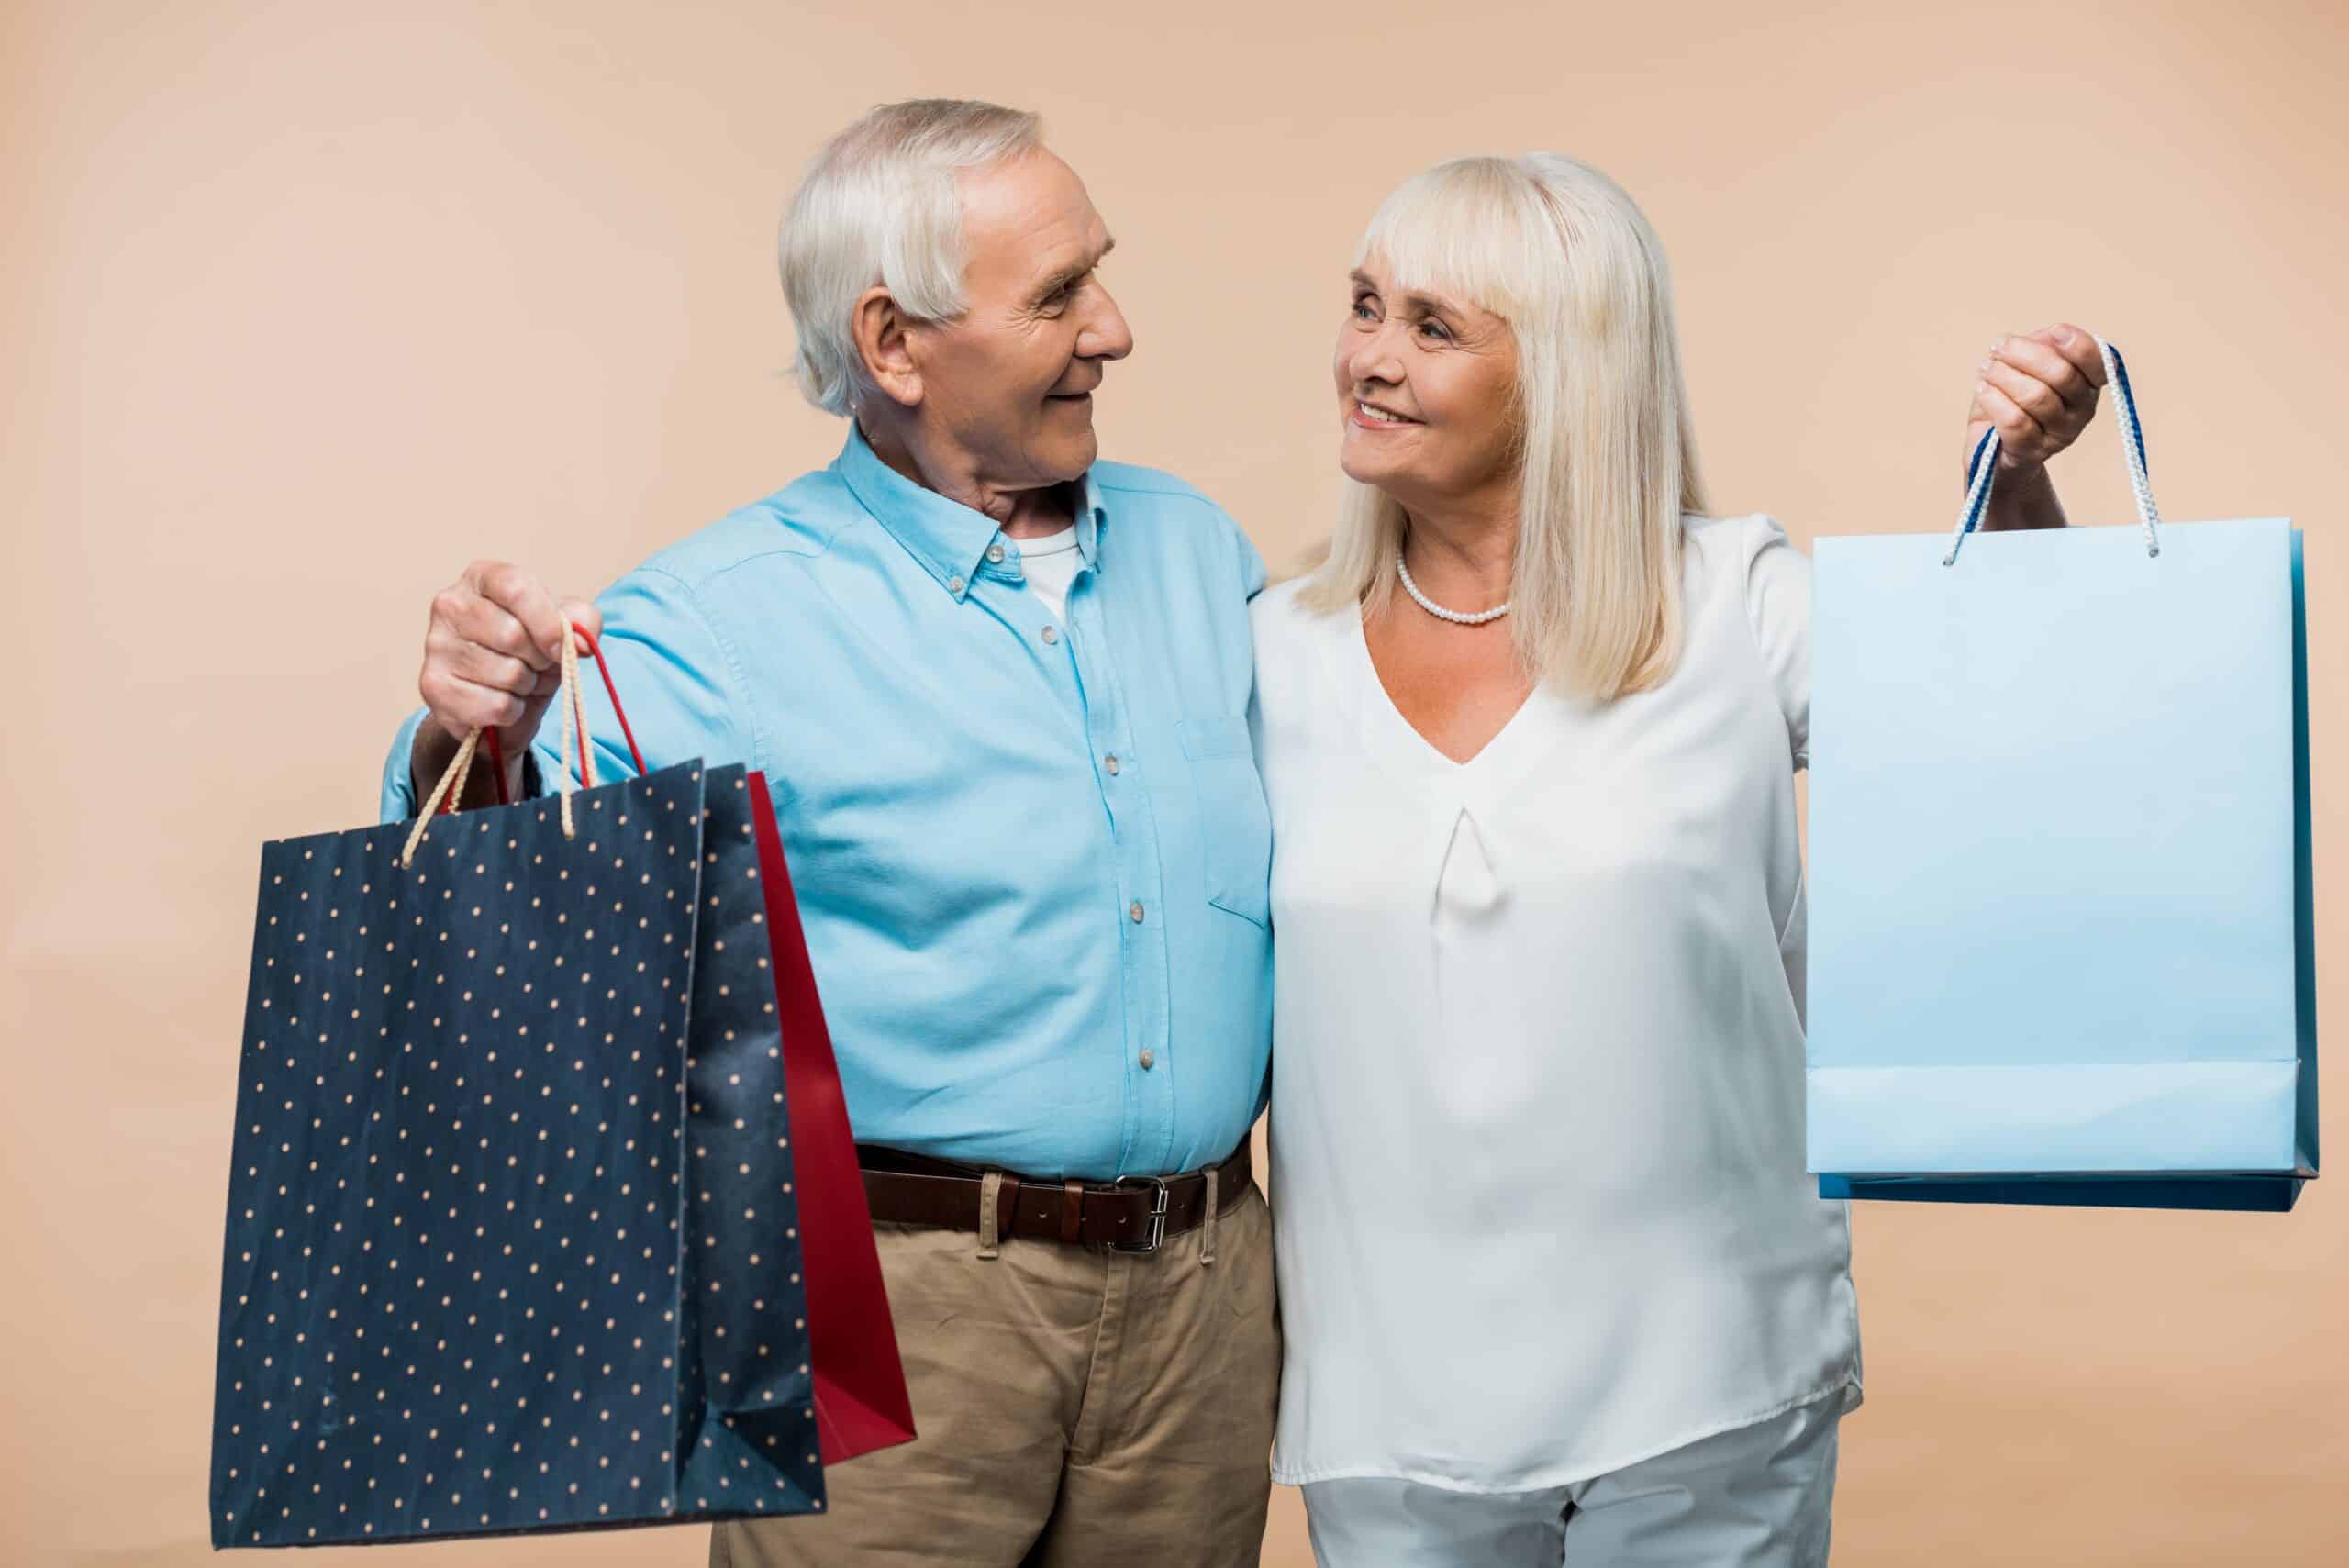 Two seniors holding shopping bags